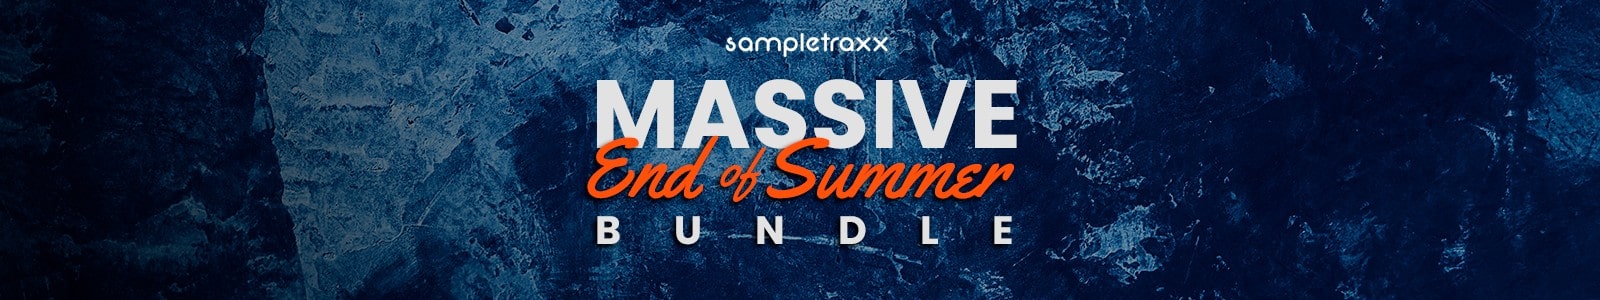 Sampletraxx Massive End of Summer Bundle